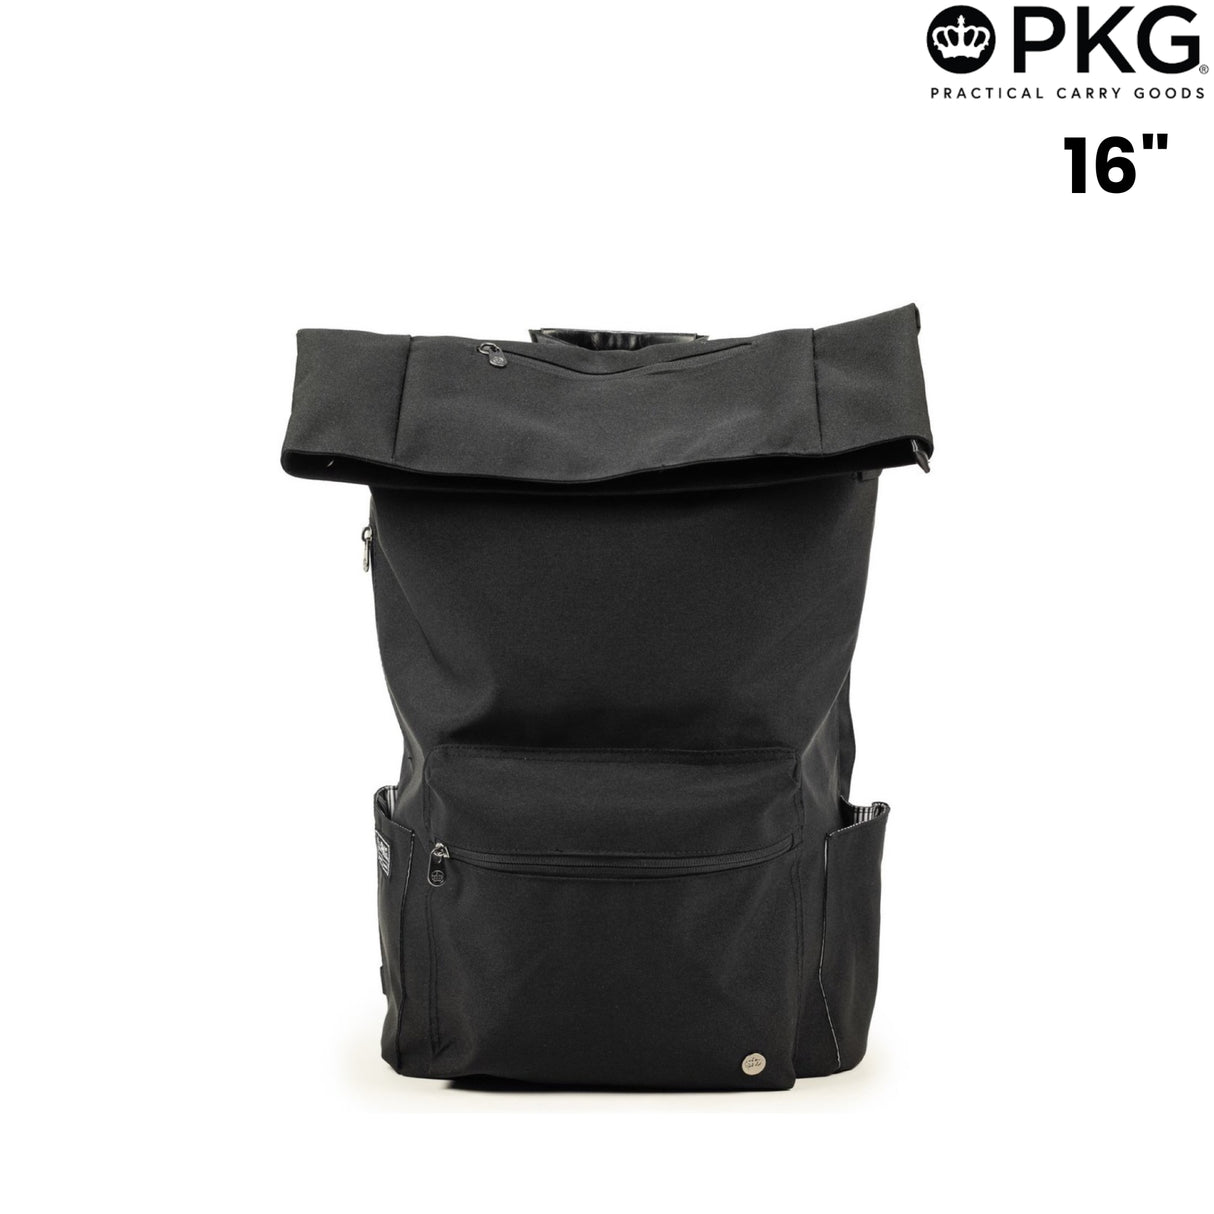 PKG Brighton II Backpack